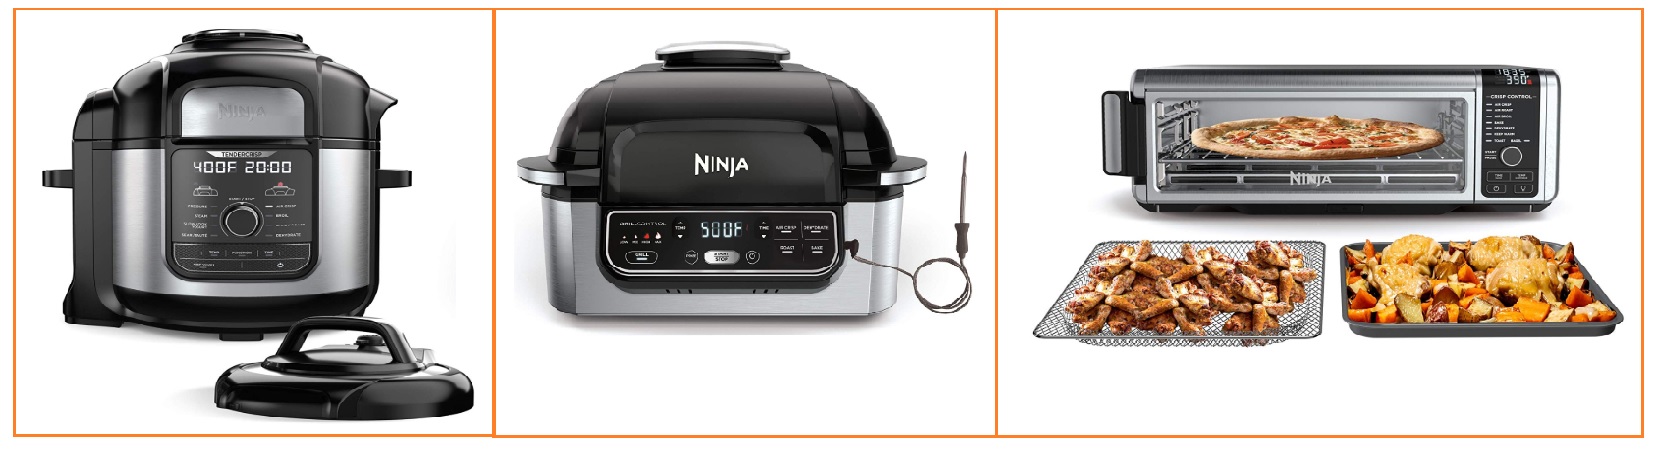 ninja deluxe pressure cooker and air fryer reviews